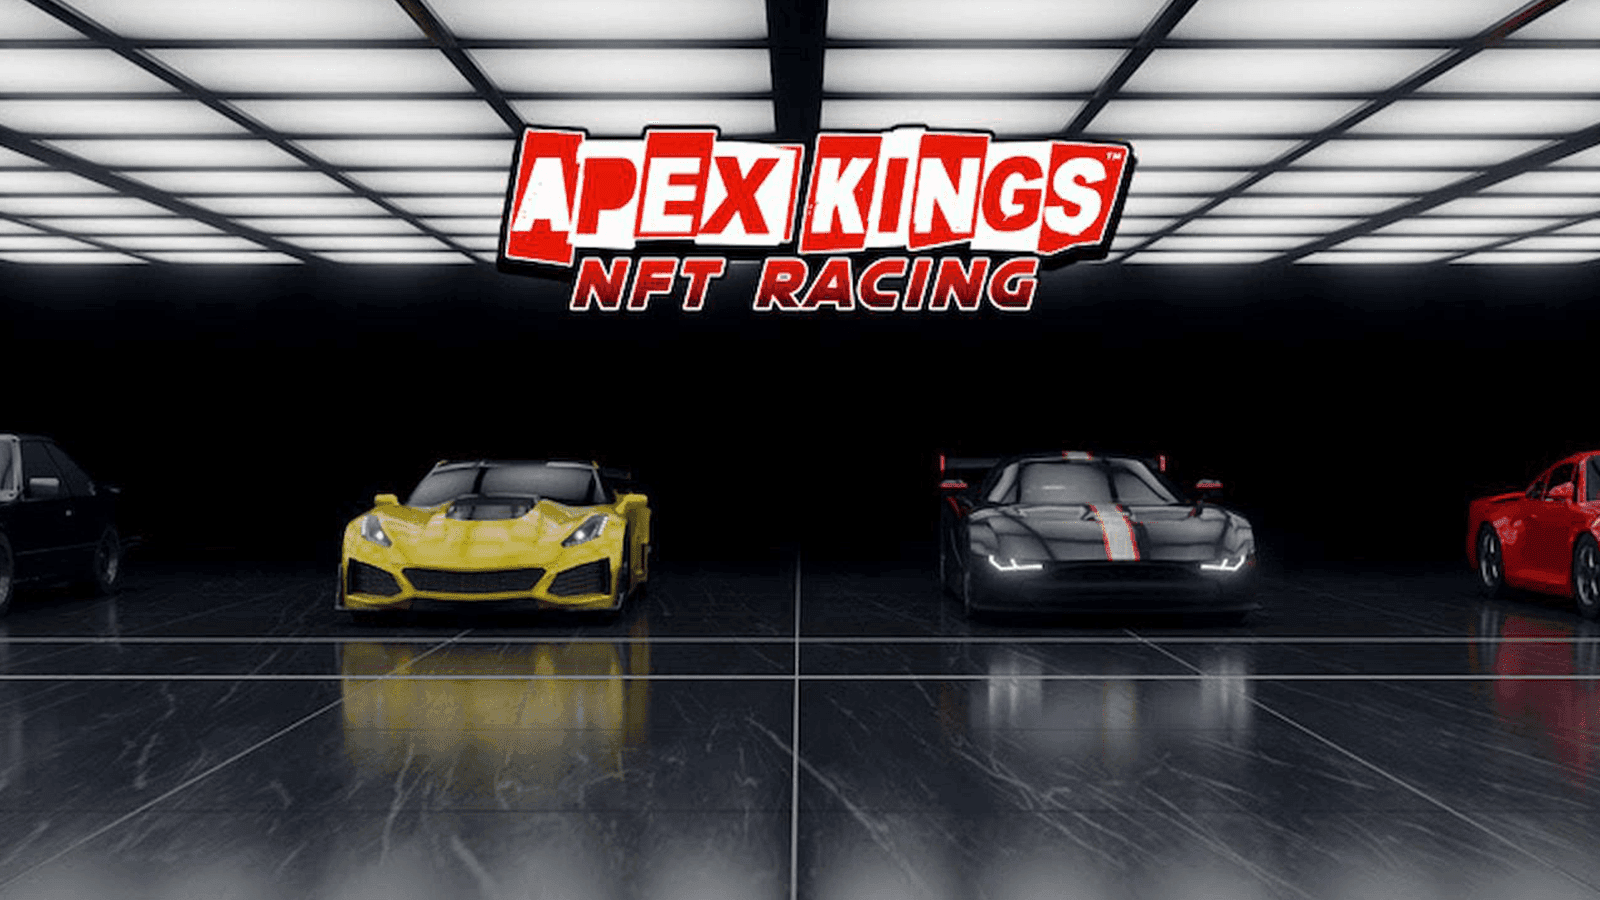 Apex Kings NFT Racing - Análise do jogo